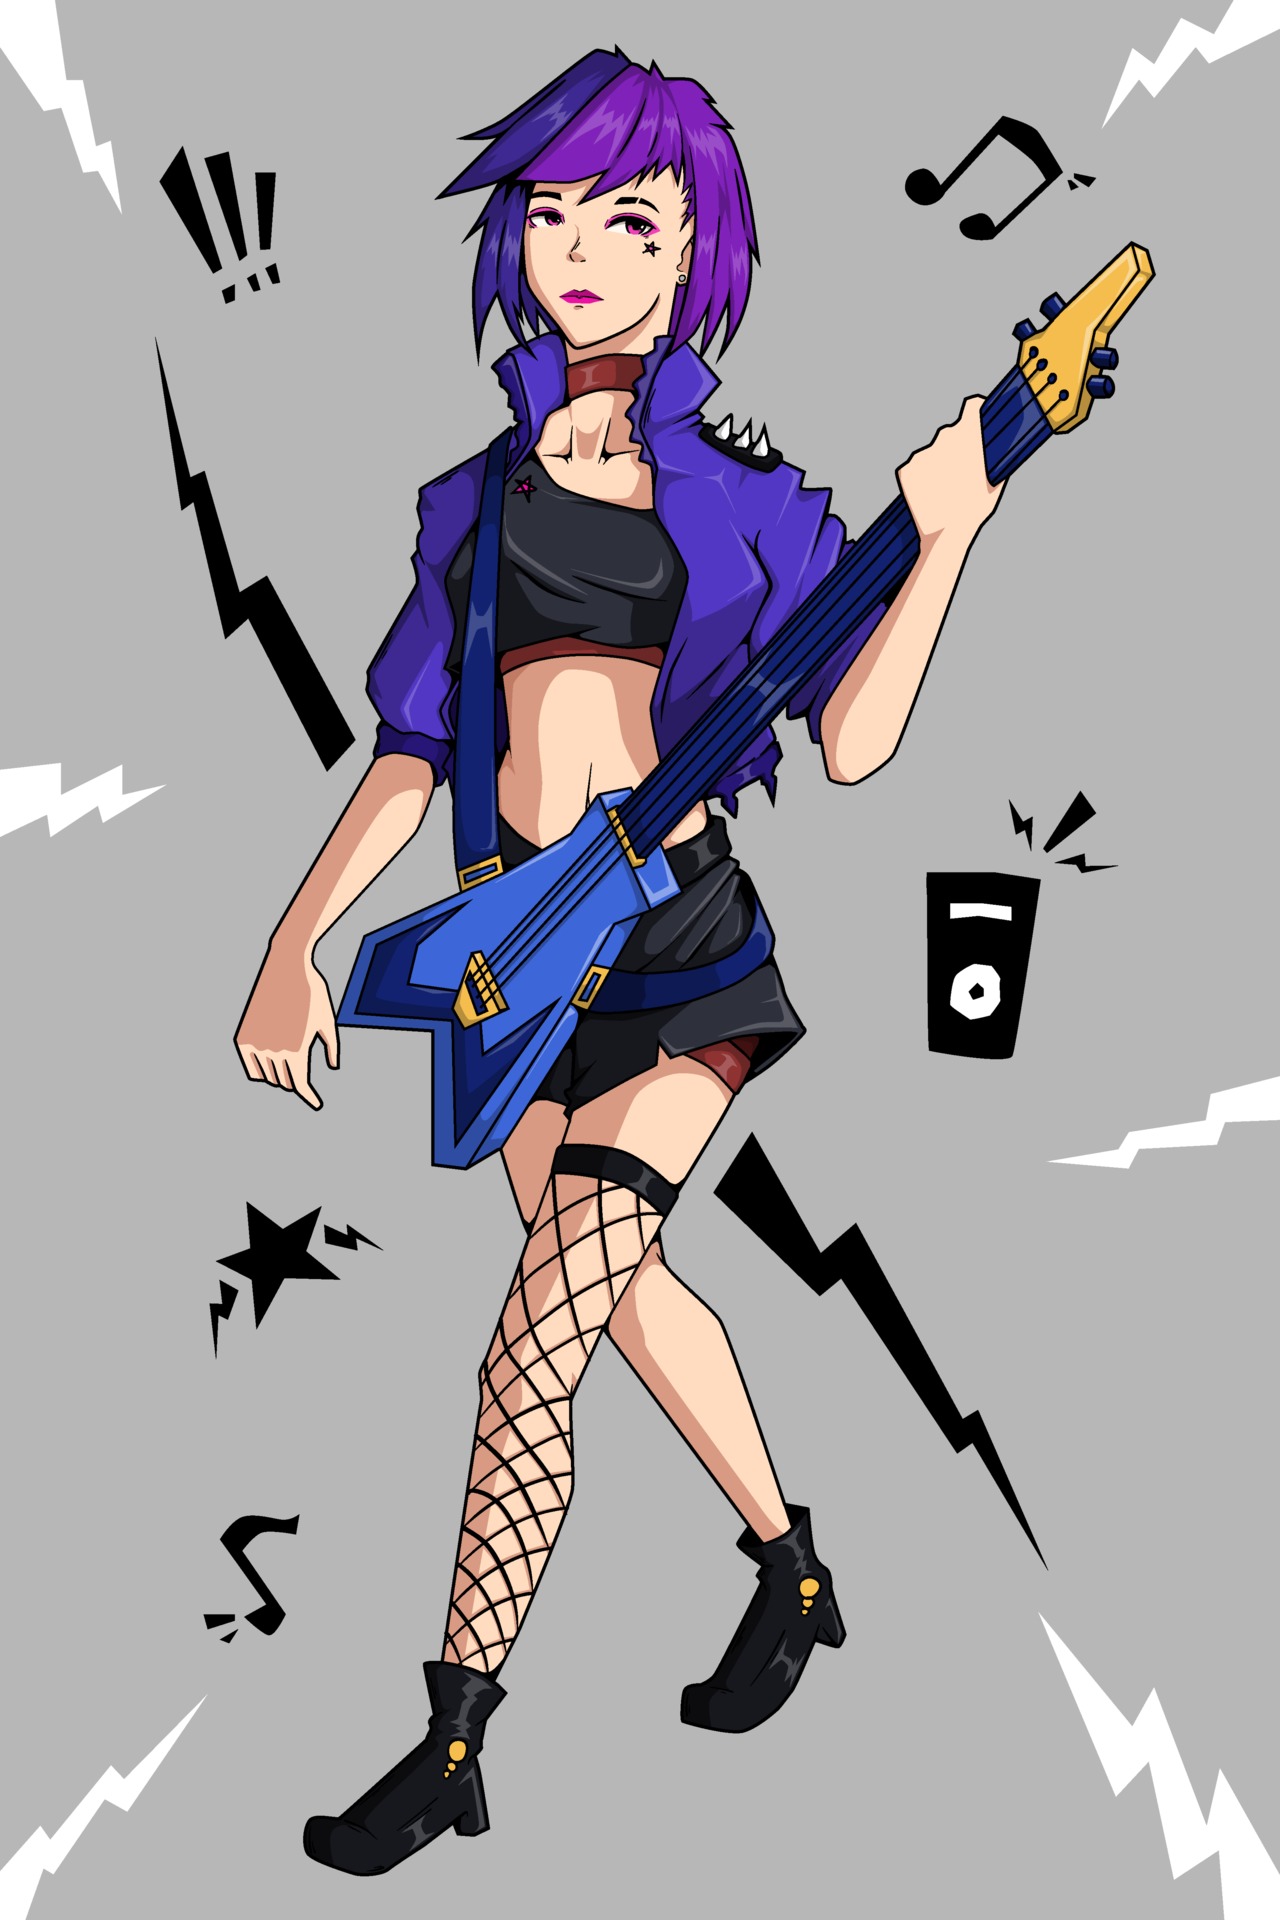 Purple hair rock girl character design 2910439 Vector Art at Vecteezy